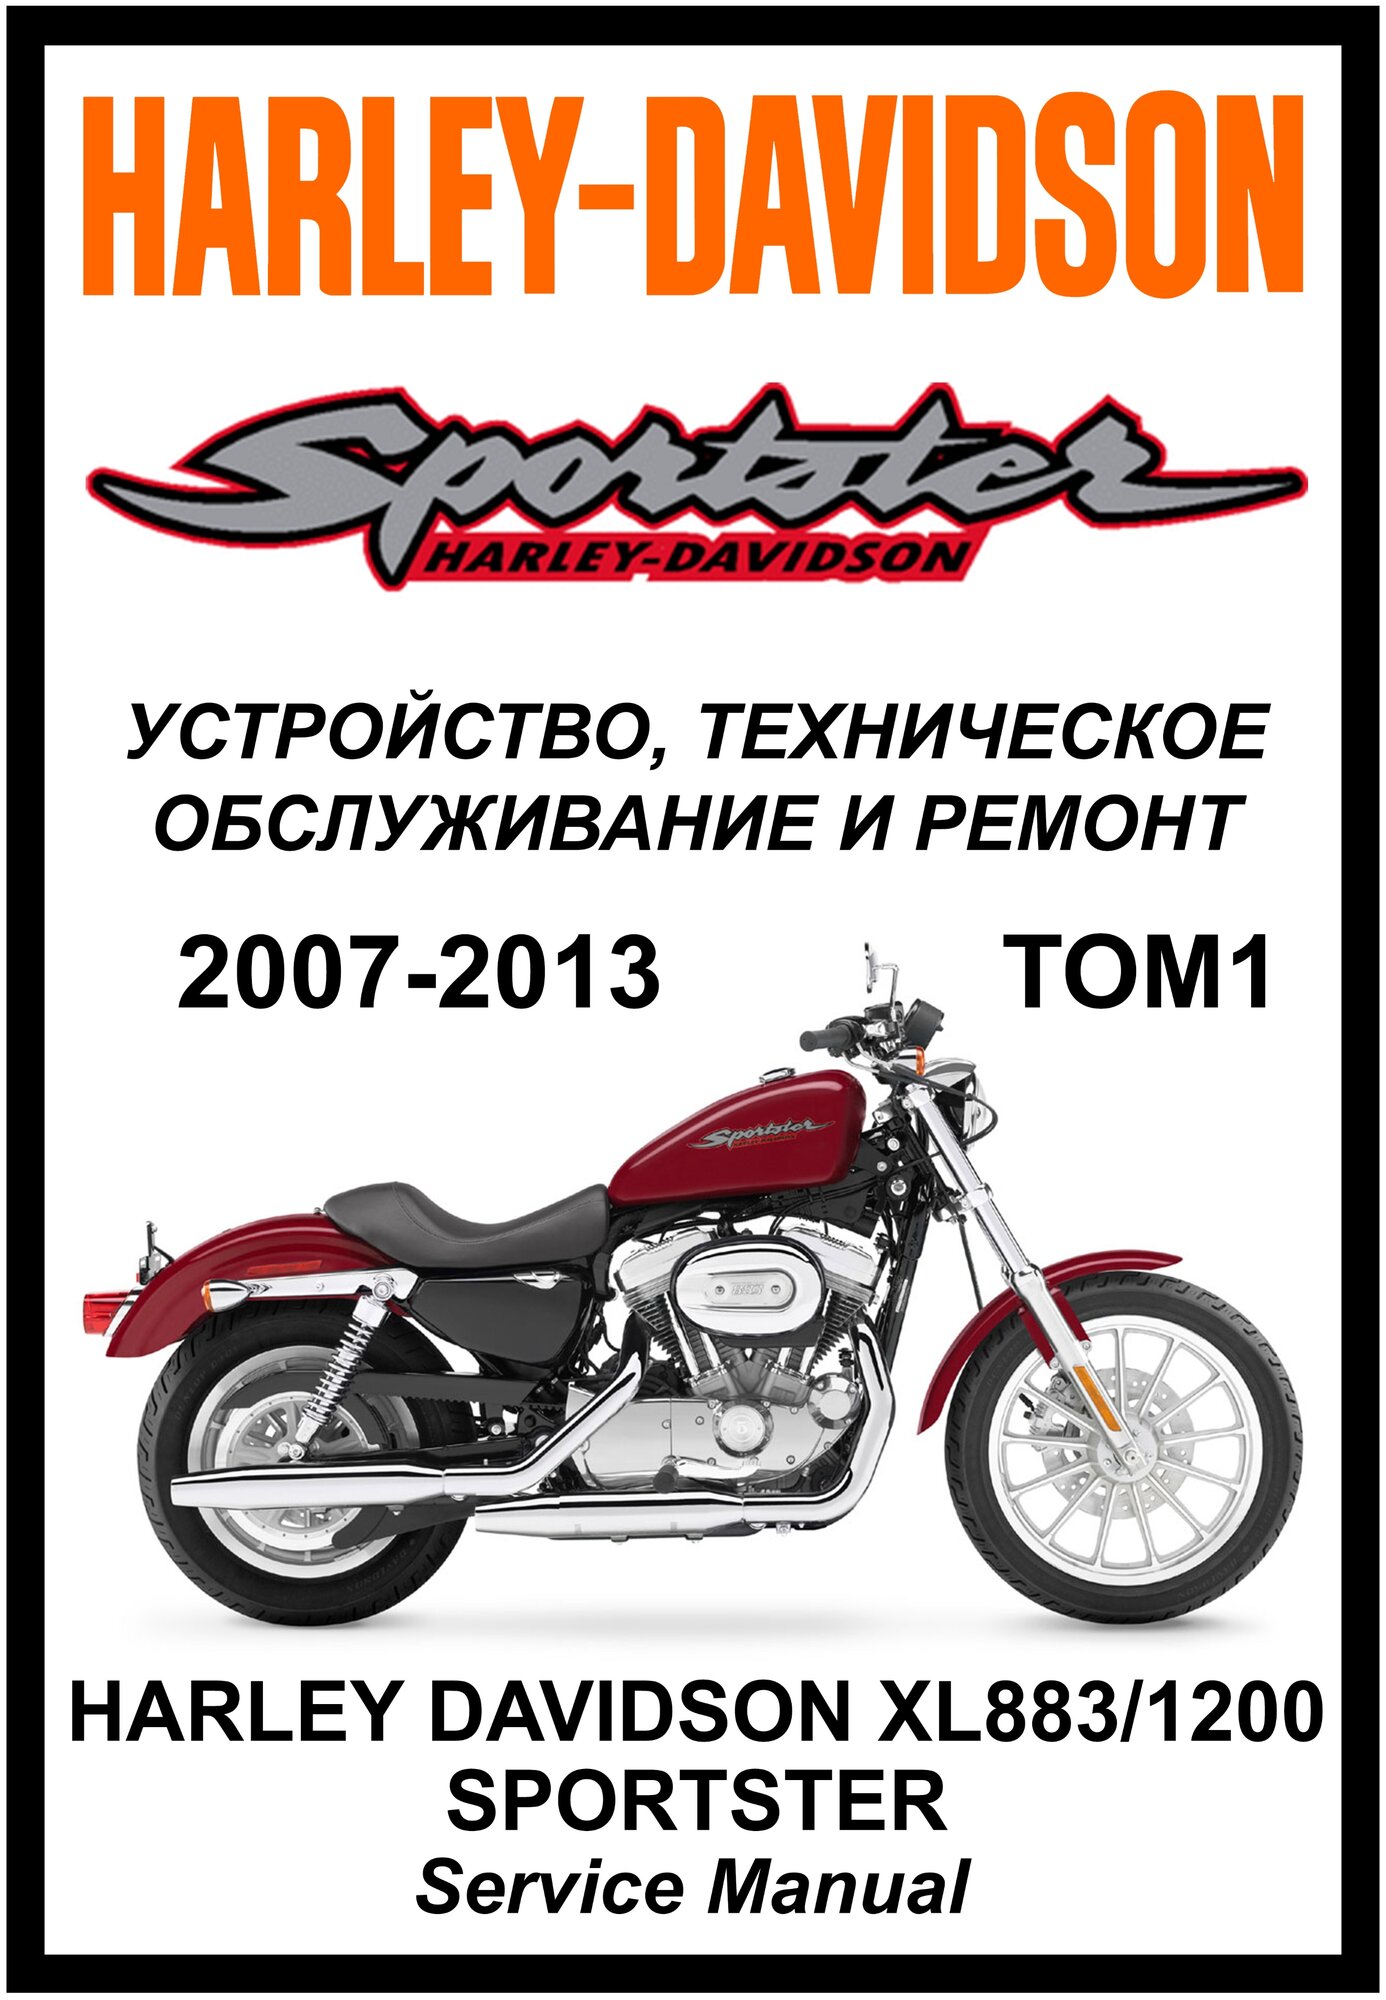 Руководство по ремонту Мото Сервис Мануал Harley Davidson XL883/1200 Sportster (2007-2013) Том 1 на русском языке